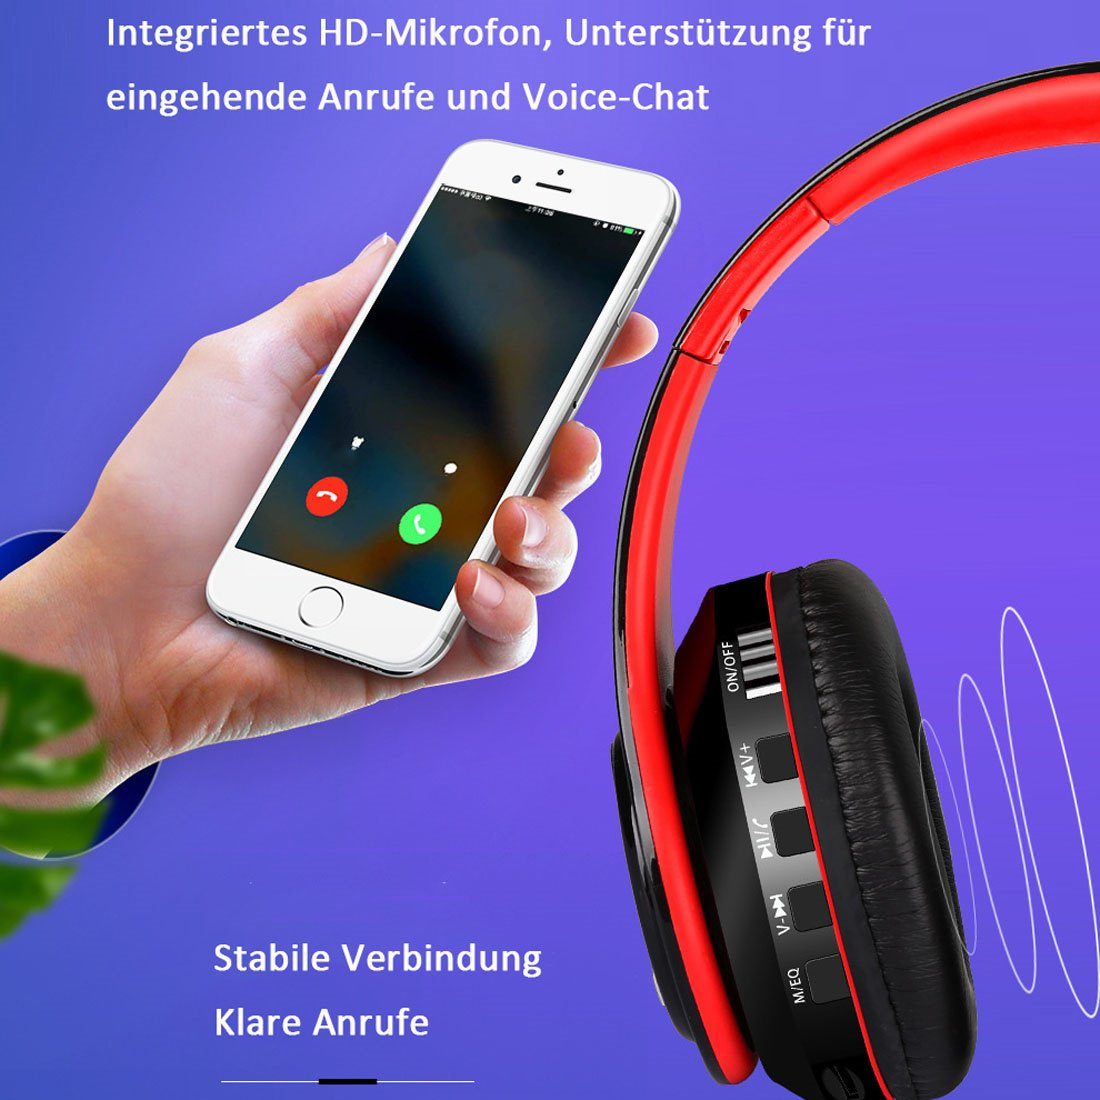 Plug-in-Sport-Headset, kabelloses orange Bluetooth-Headset, DÖRÖY Bluetooth-Kopfhörer Stereo-Sound